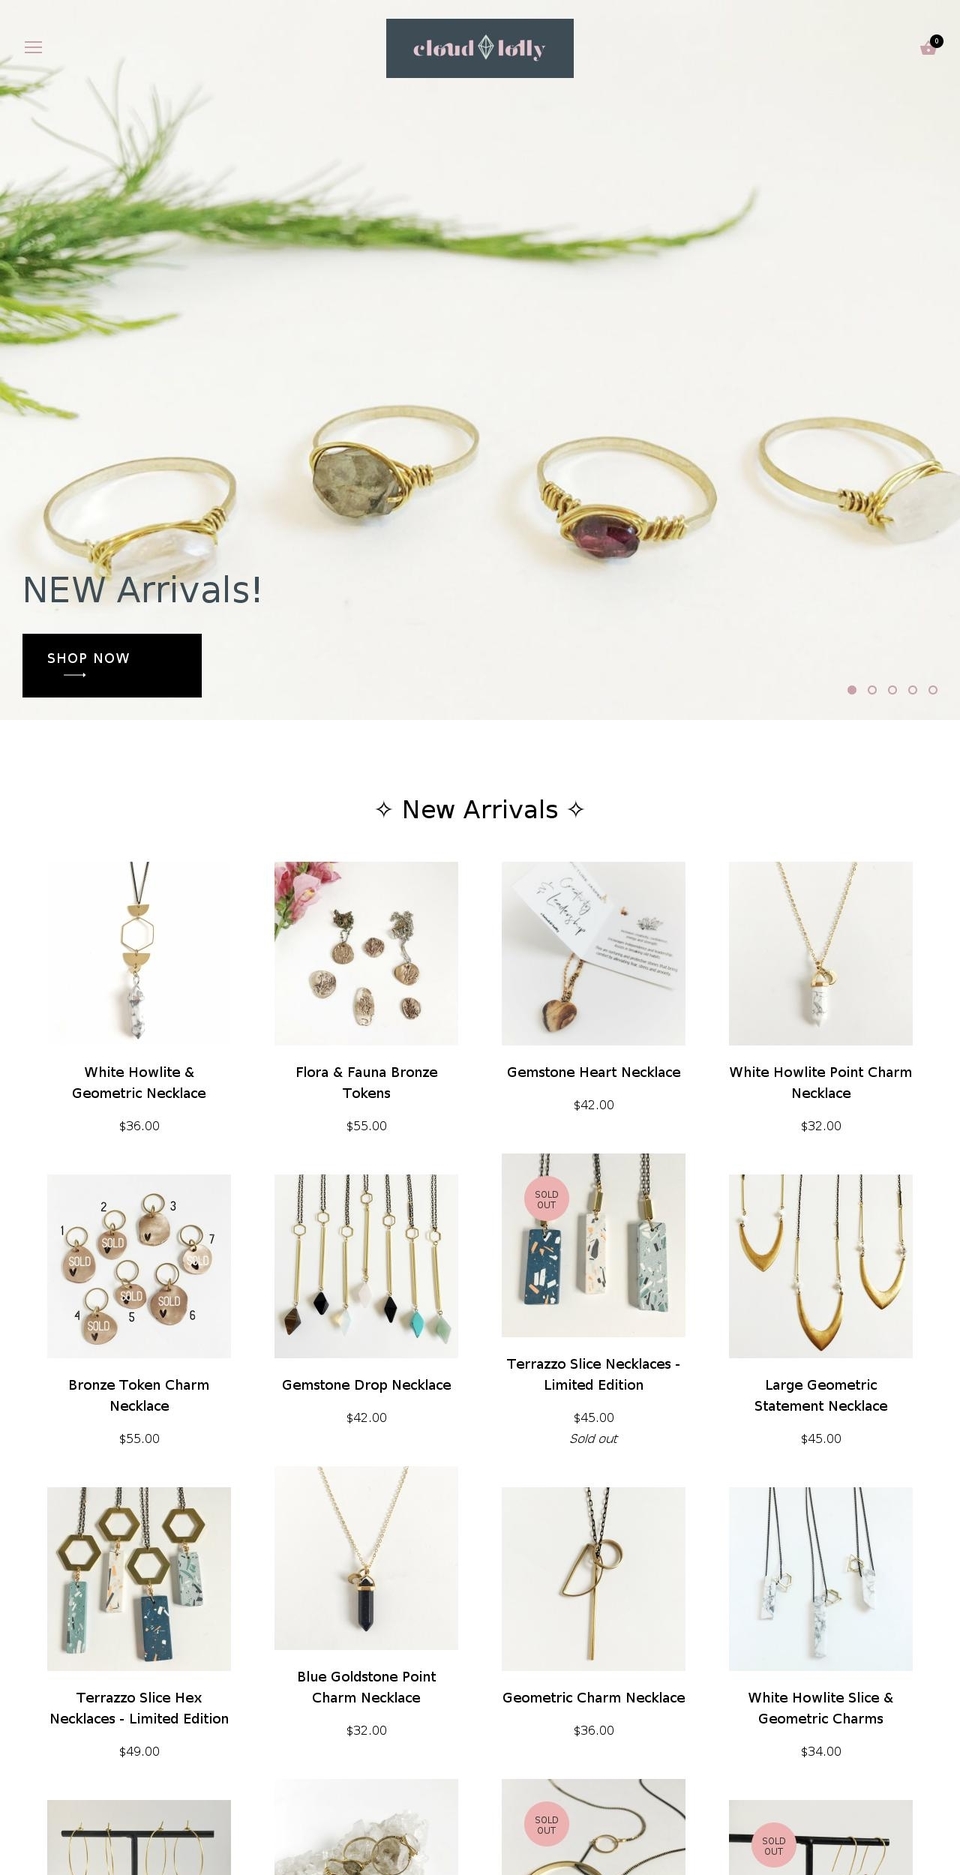 cloudandlolly.boutique shopify website screenshot